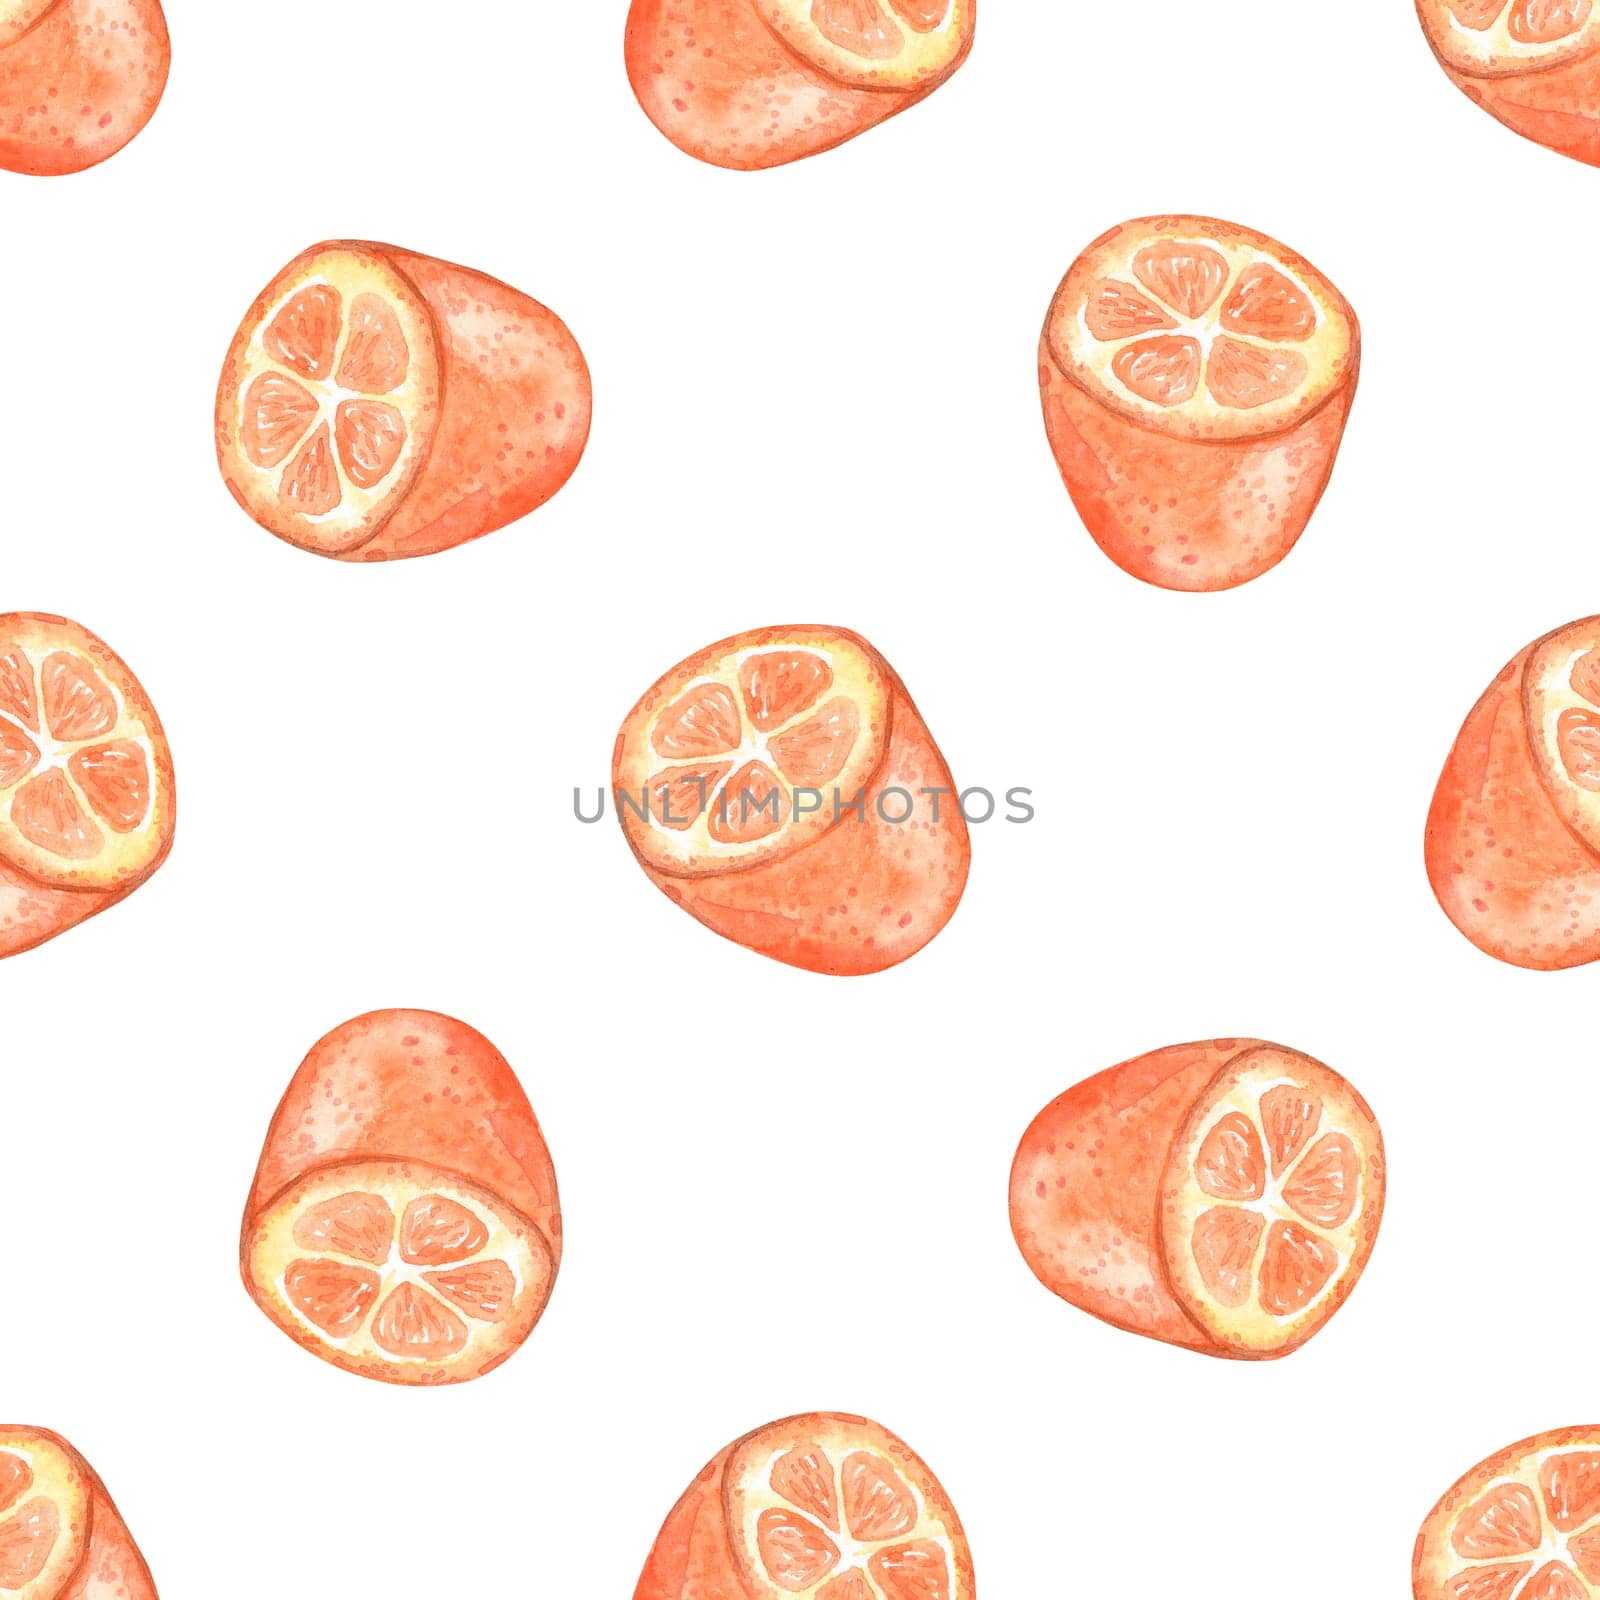 Watercolor cut kumquat fruit seamless pattern on white background by dreamloud